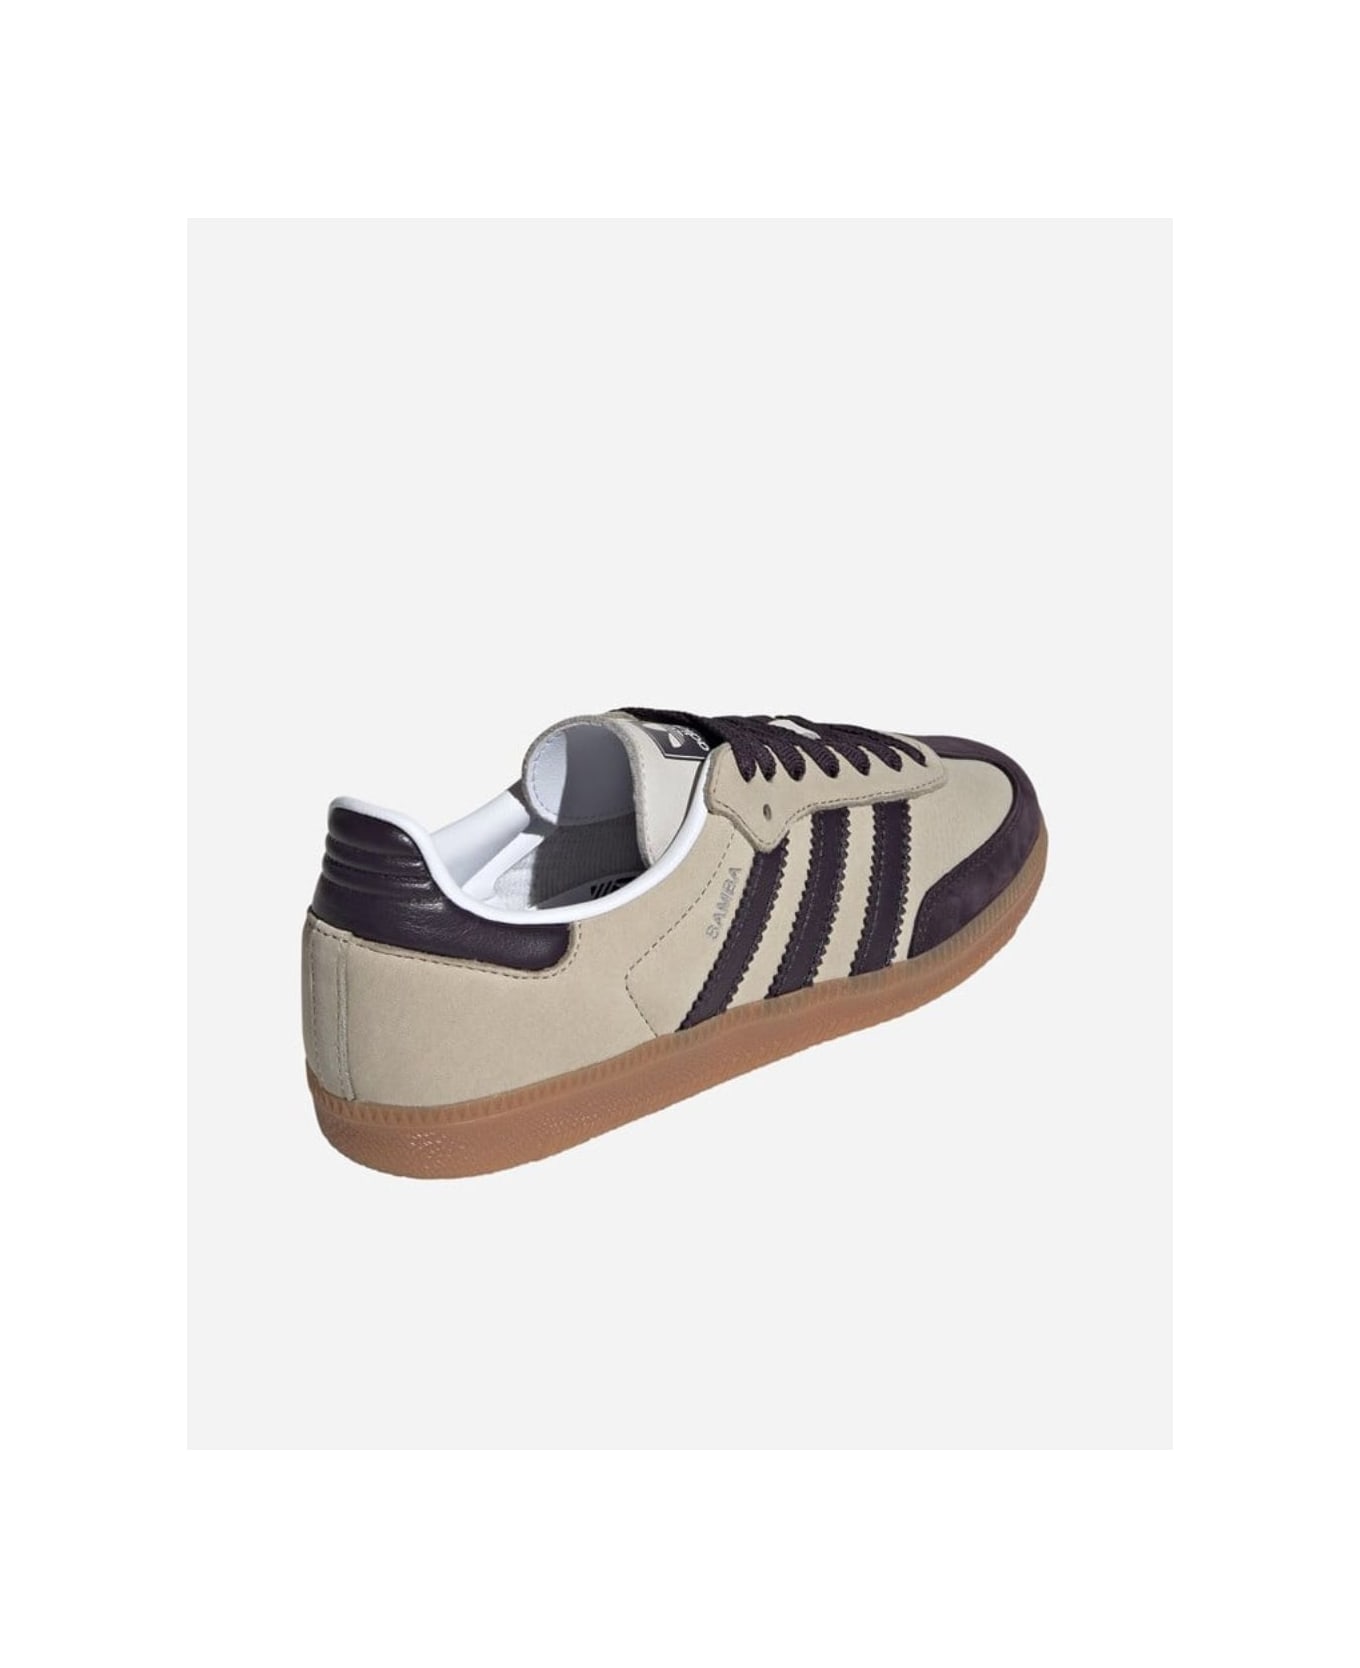 Adidas Samba Og Sneakers - Putgre Aurbla Silvmt